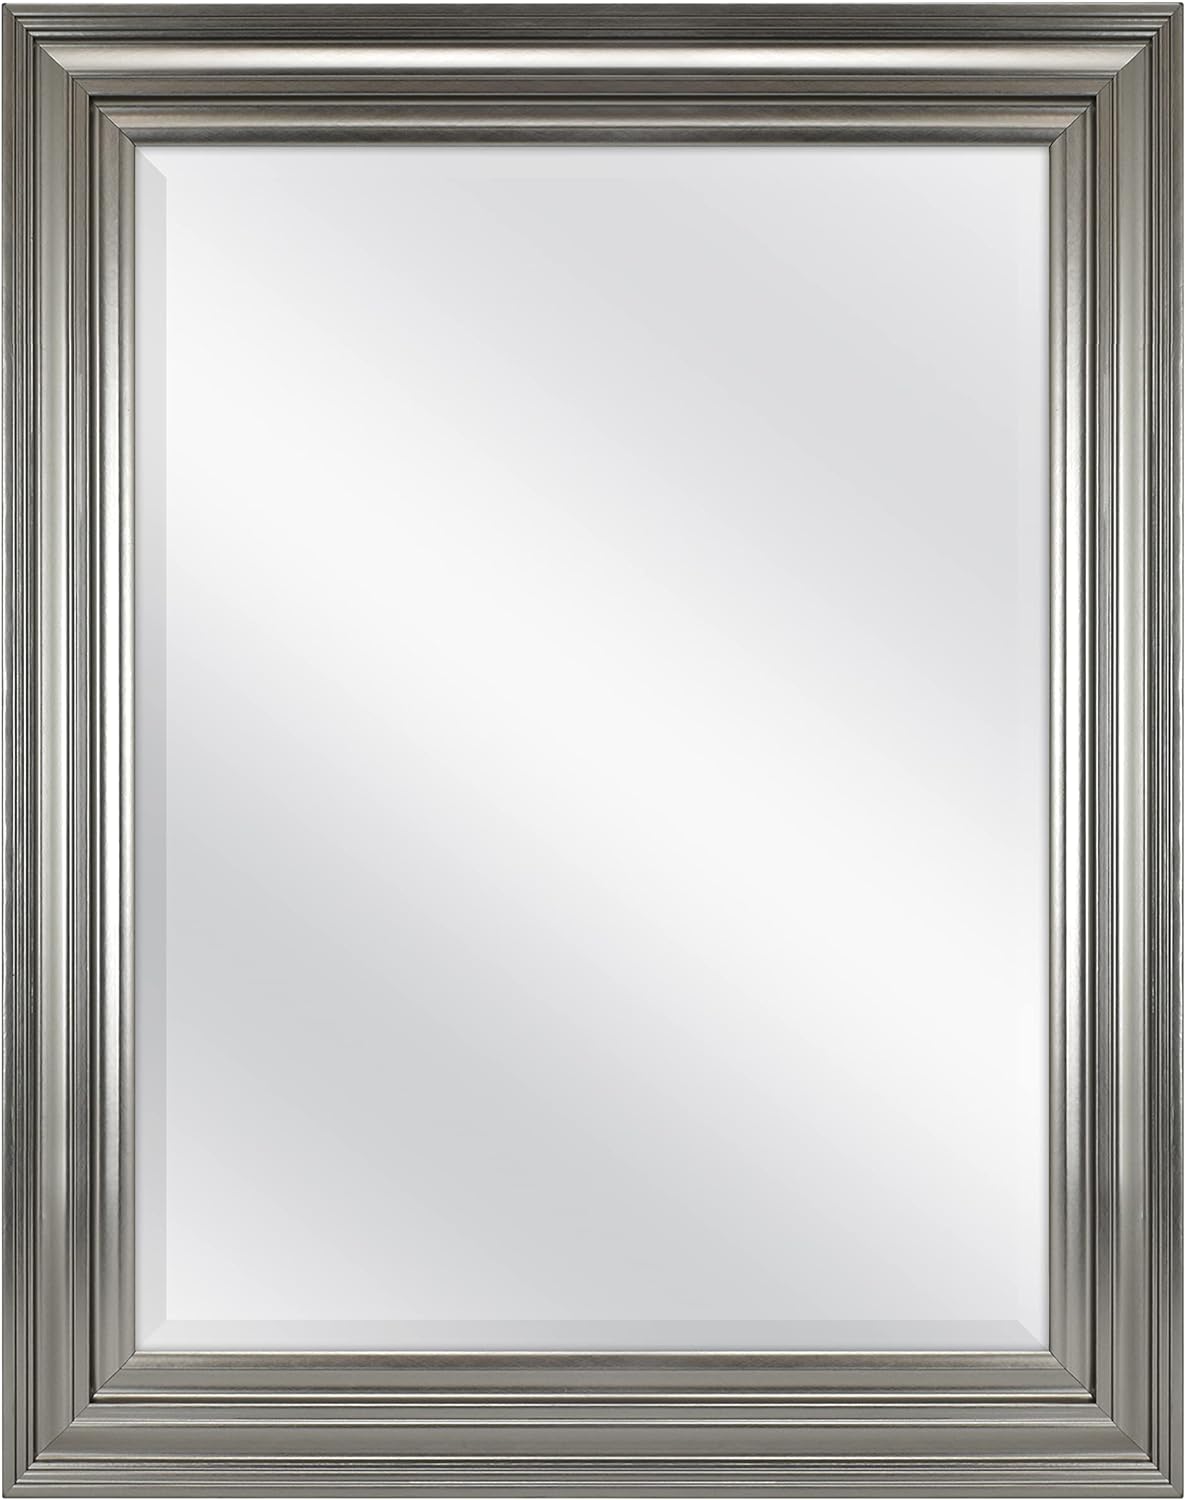 MCS Ezra Wall Mirror, Brushed Nickel, 22.66 x 28.66 in